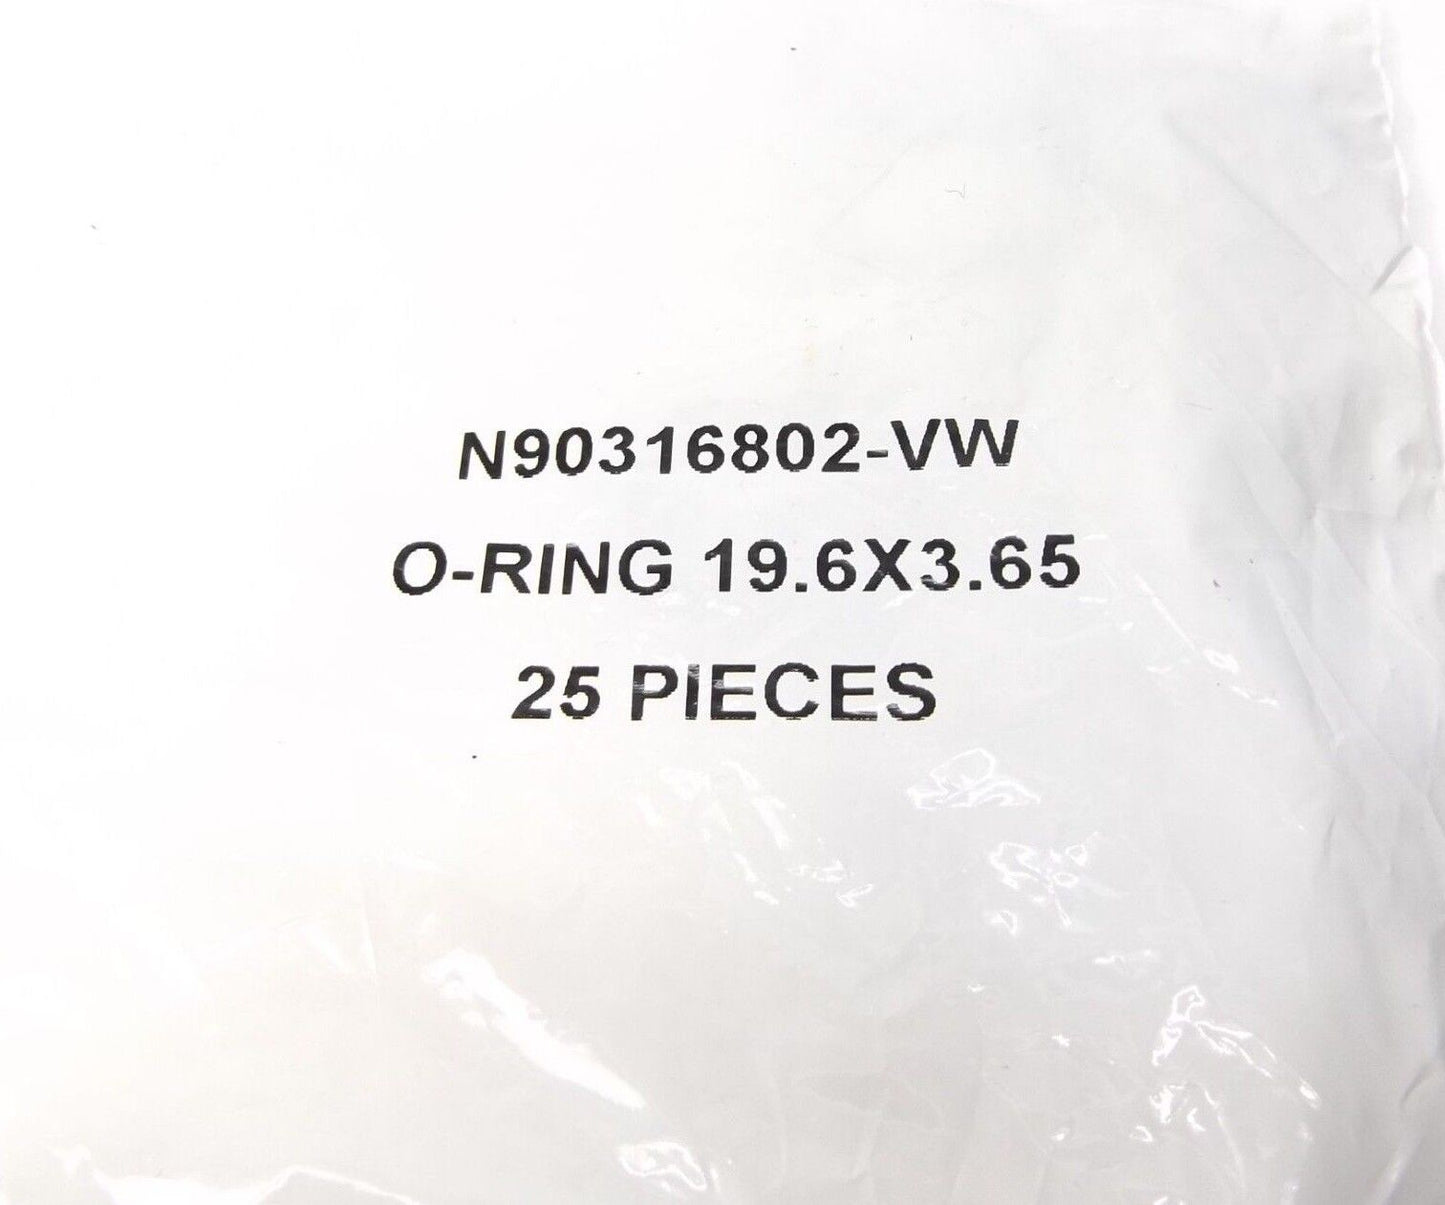 BAG OF 25 VW N90316802-VW O-RING 19.6 X 3.65 FOR COOLANT TEMPERATURE SENSOR